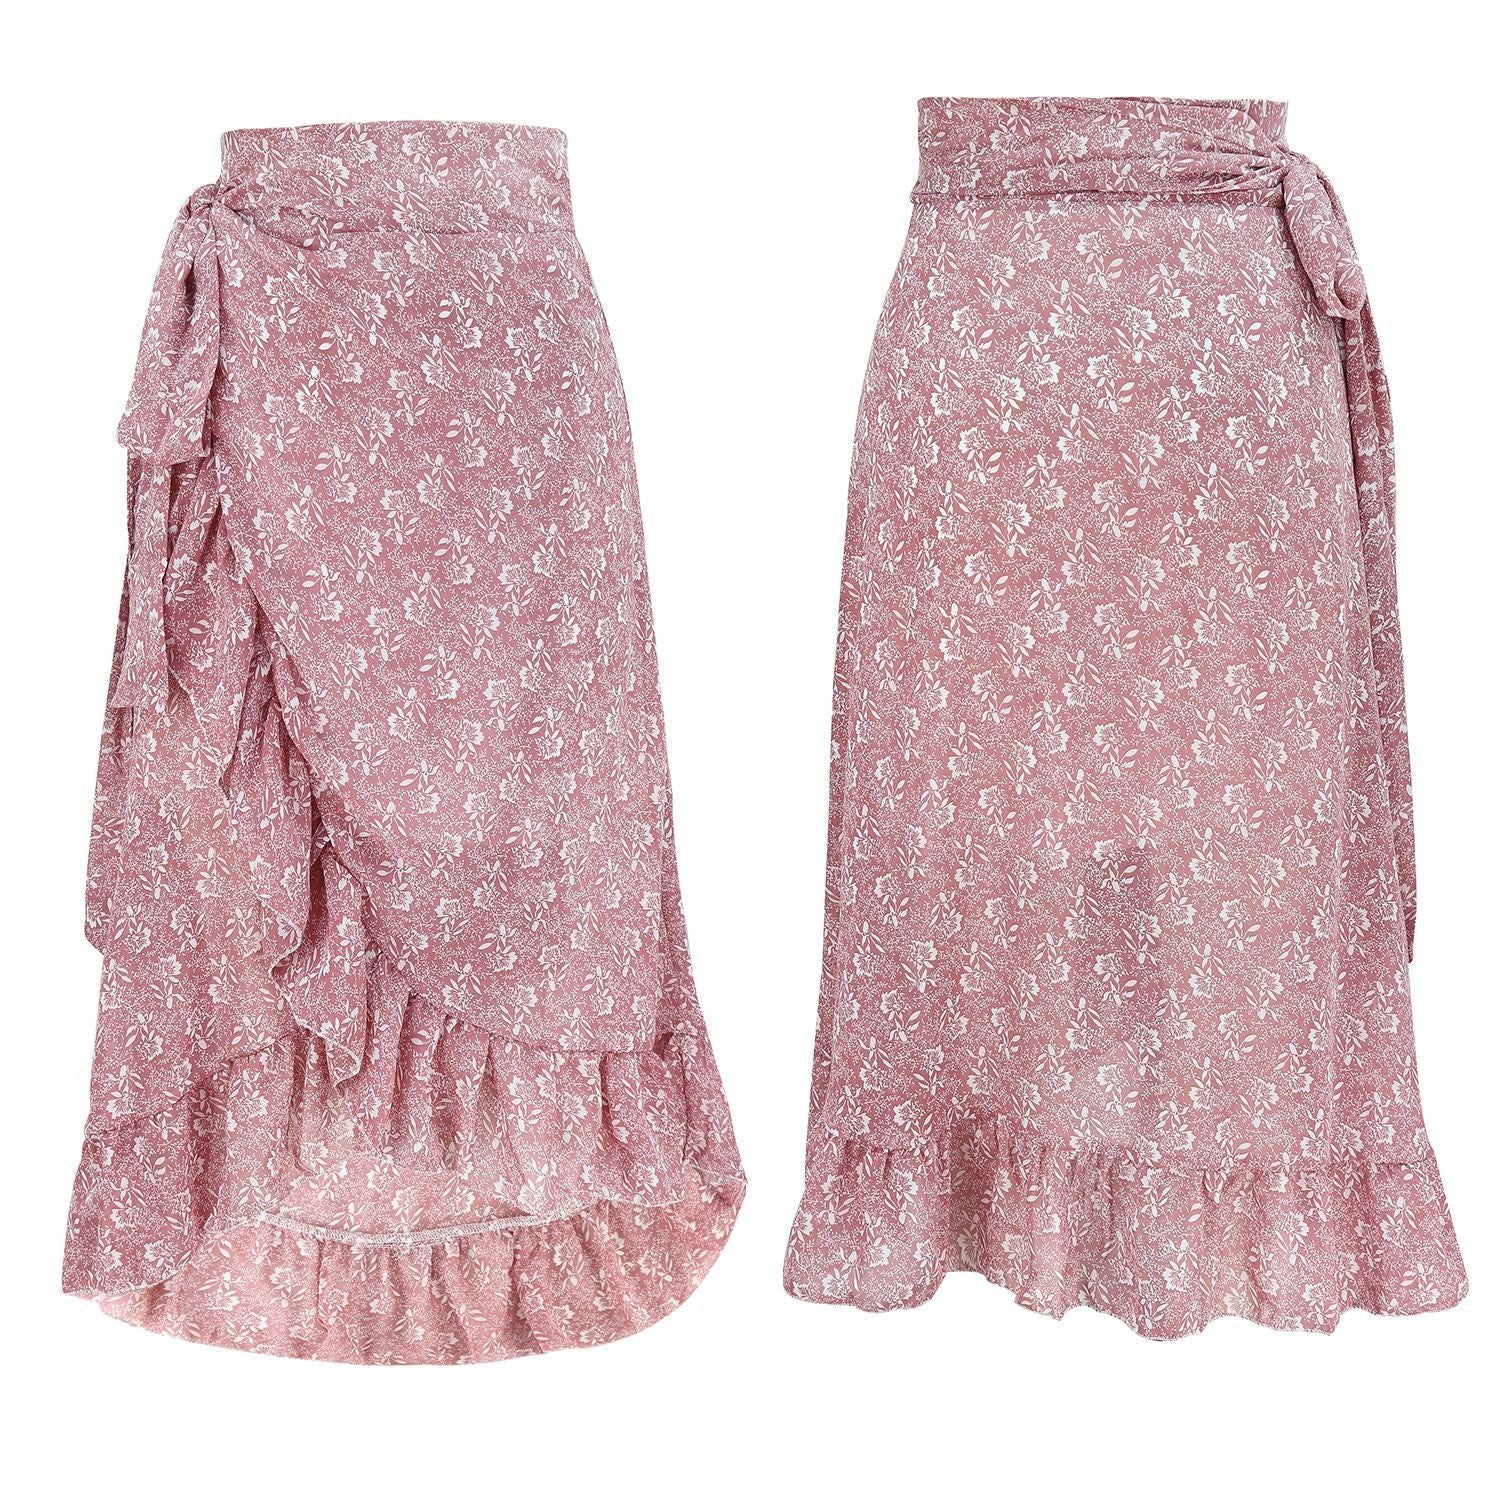 Sexy Summer Irregular Chiffon Skrts-Skirts-Pink-S-Free Shipping Leatheretro